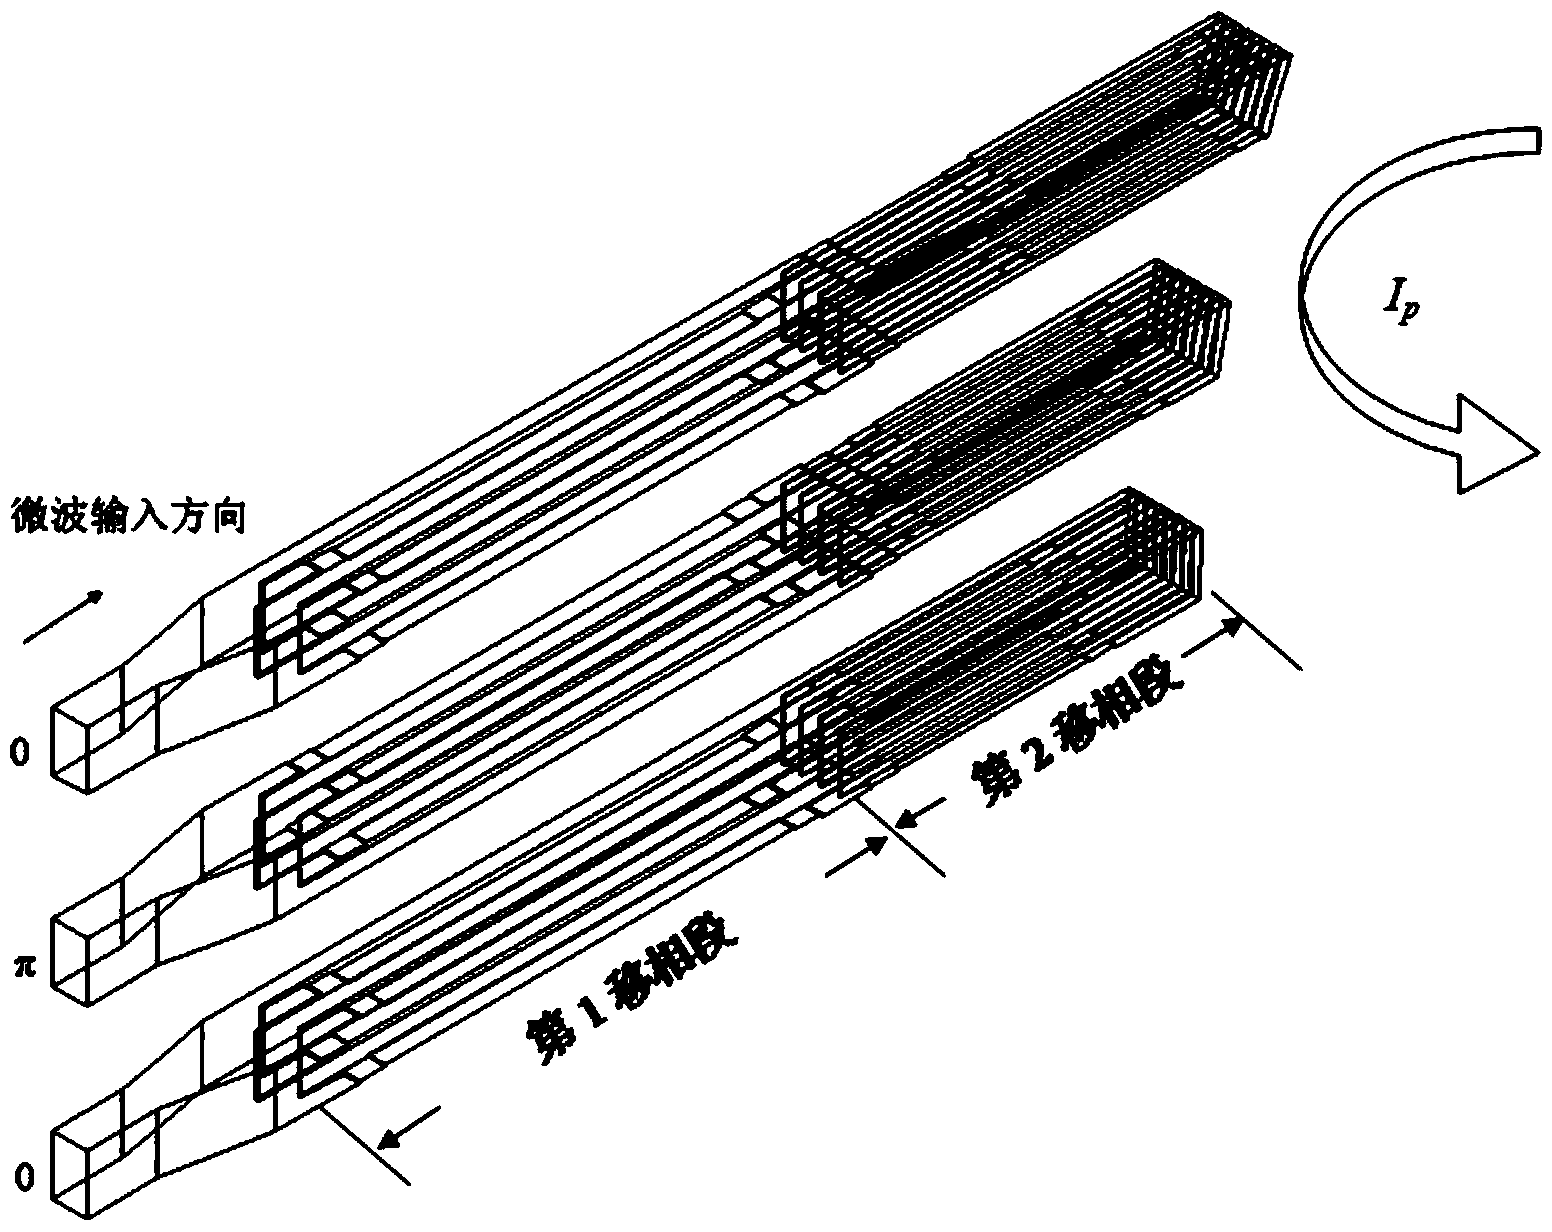 Low-hybrid-wave antenna phase compensation method